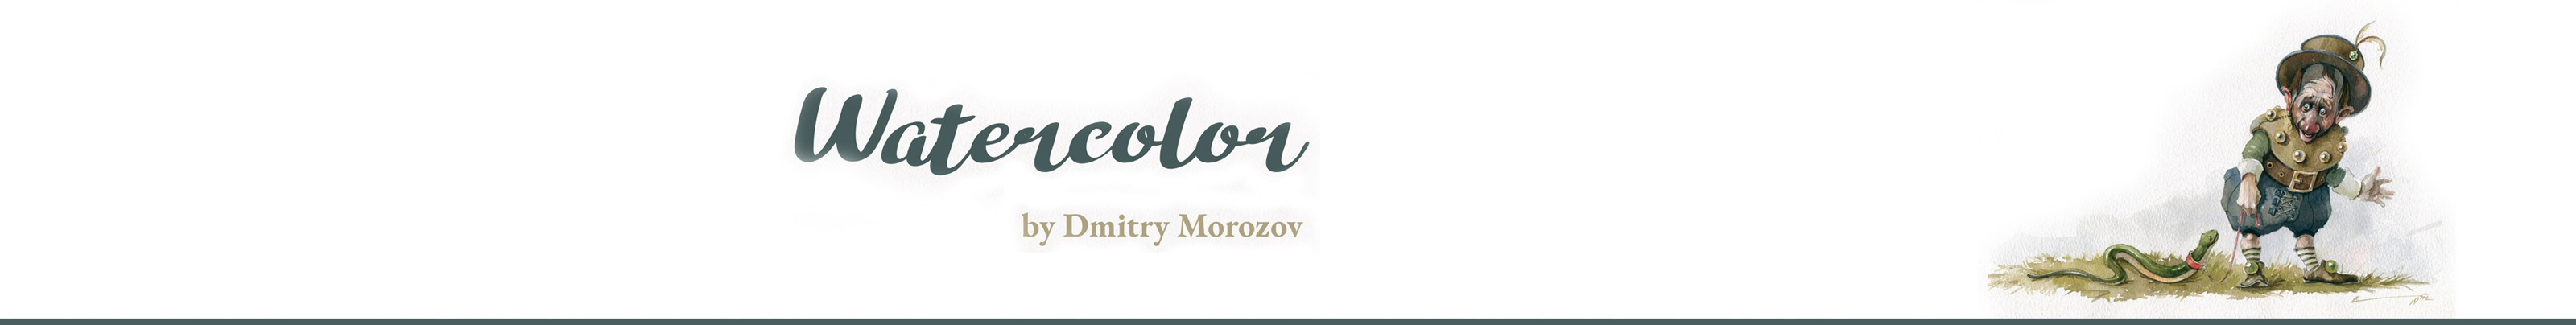 Баннер профиля Dmitry Morozov